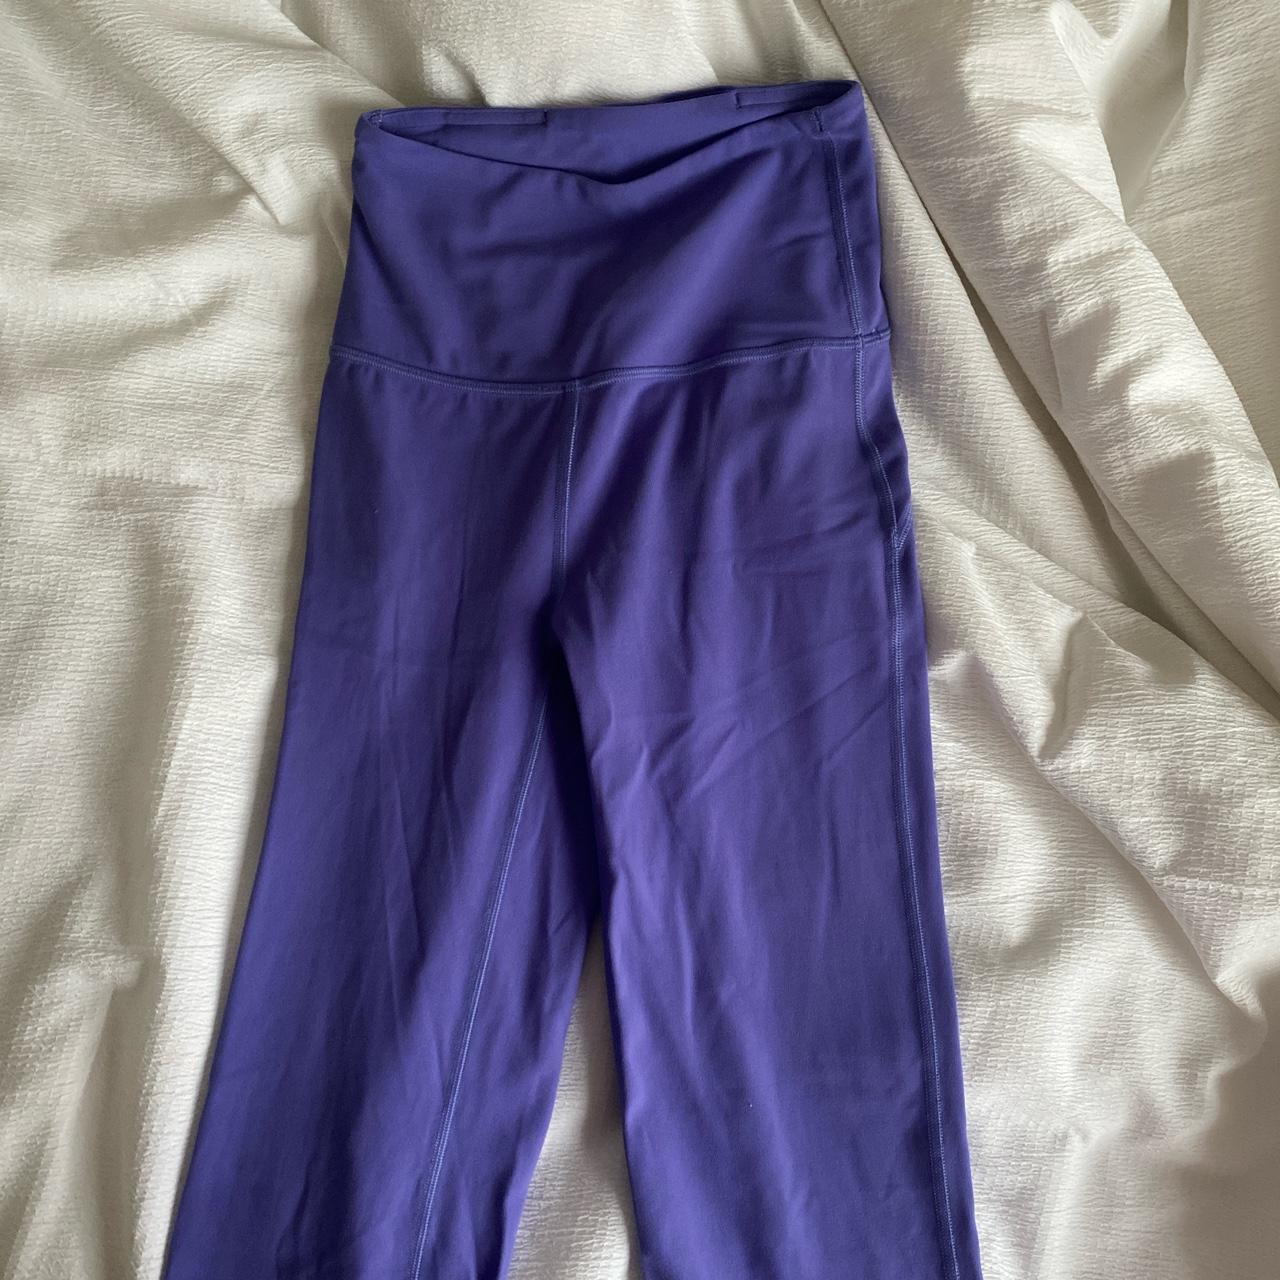 Lululemon size 2 purple flare leggings. , I’m not